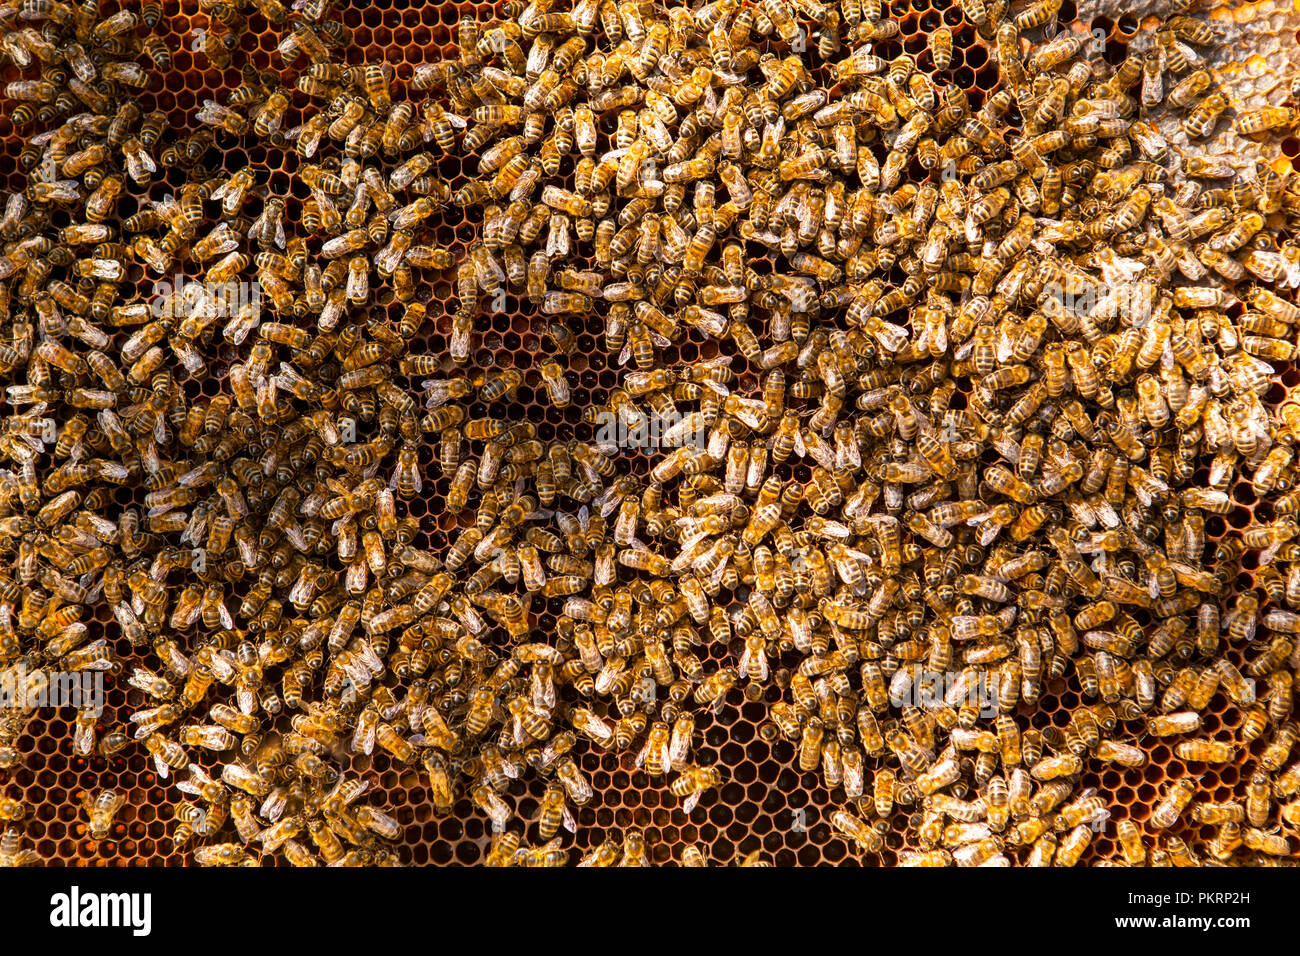 Working bees on honeycomb. Beekeeping concept. Healthy food. Stock Photo